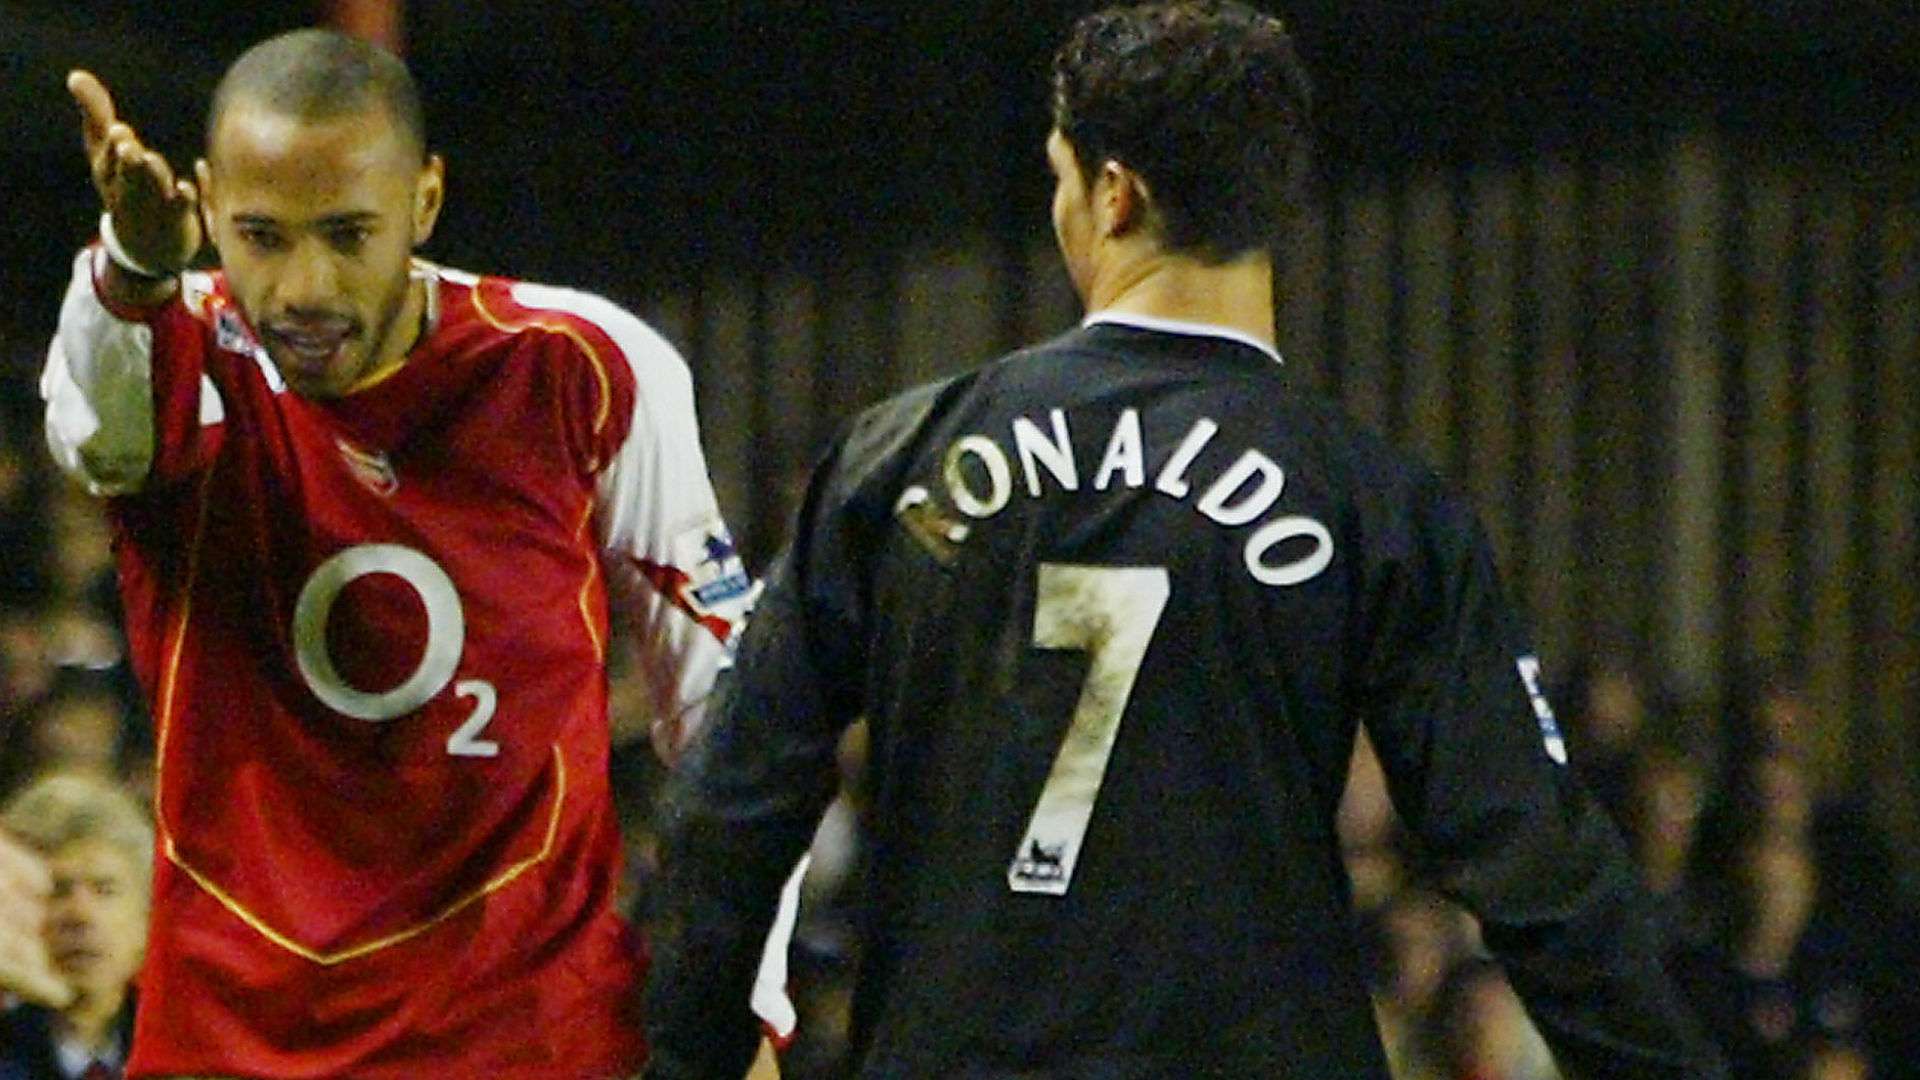 Arsenal Manchester United 2005 Henry Ronaldo